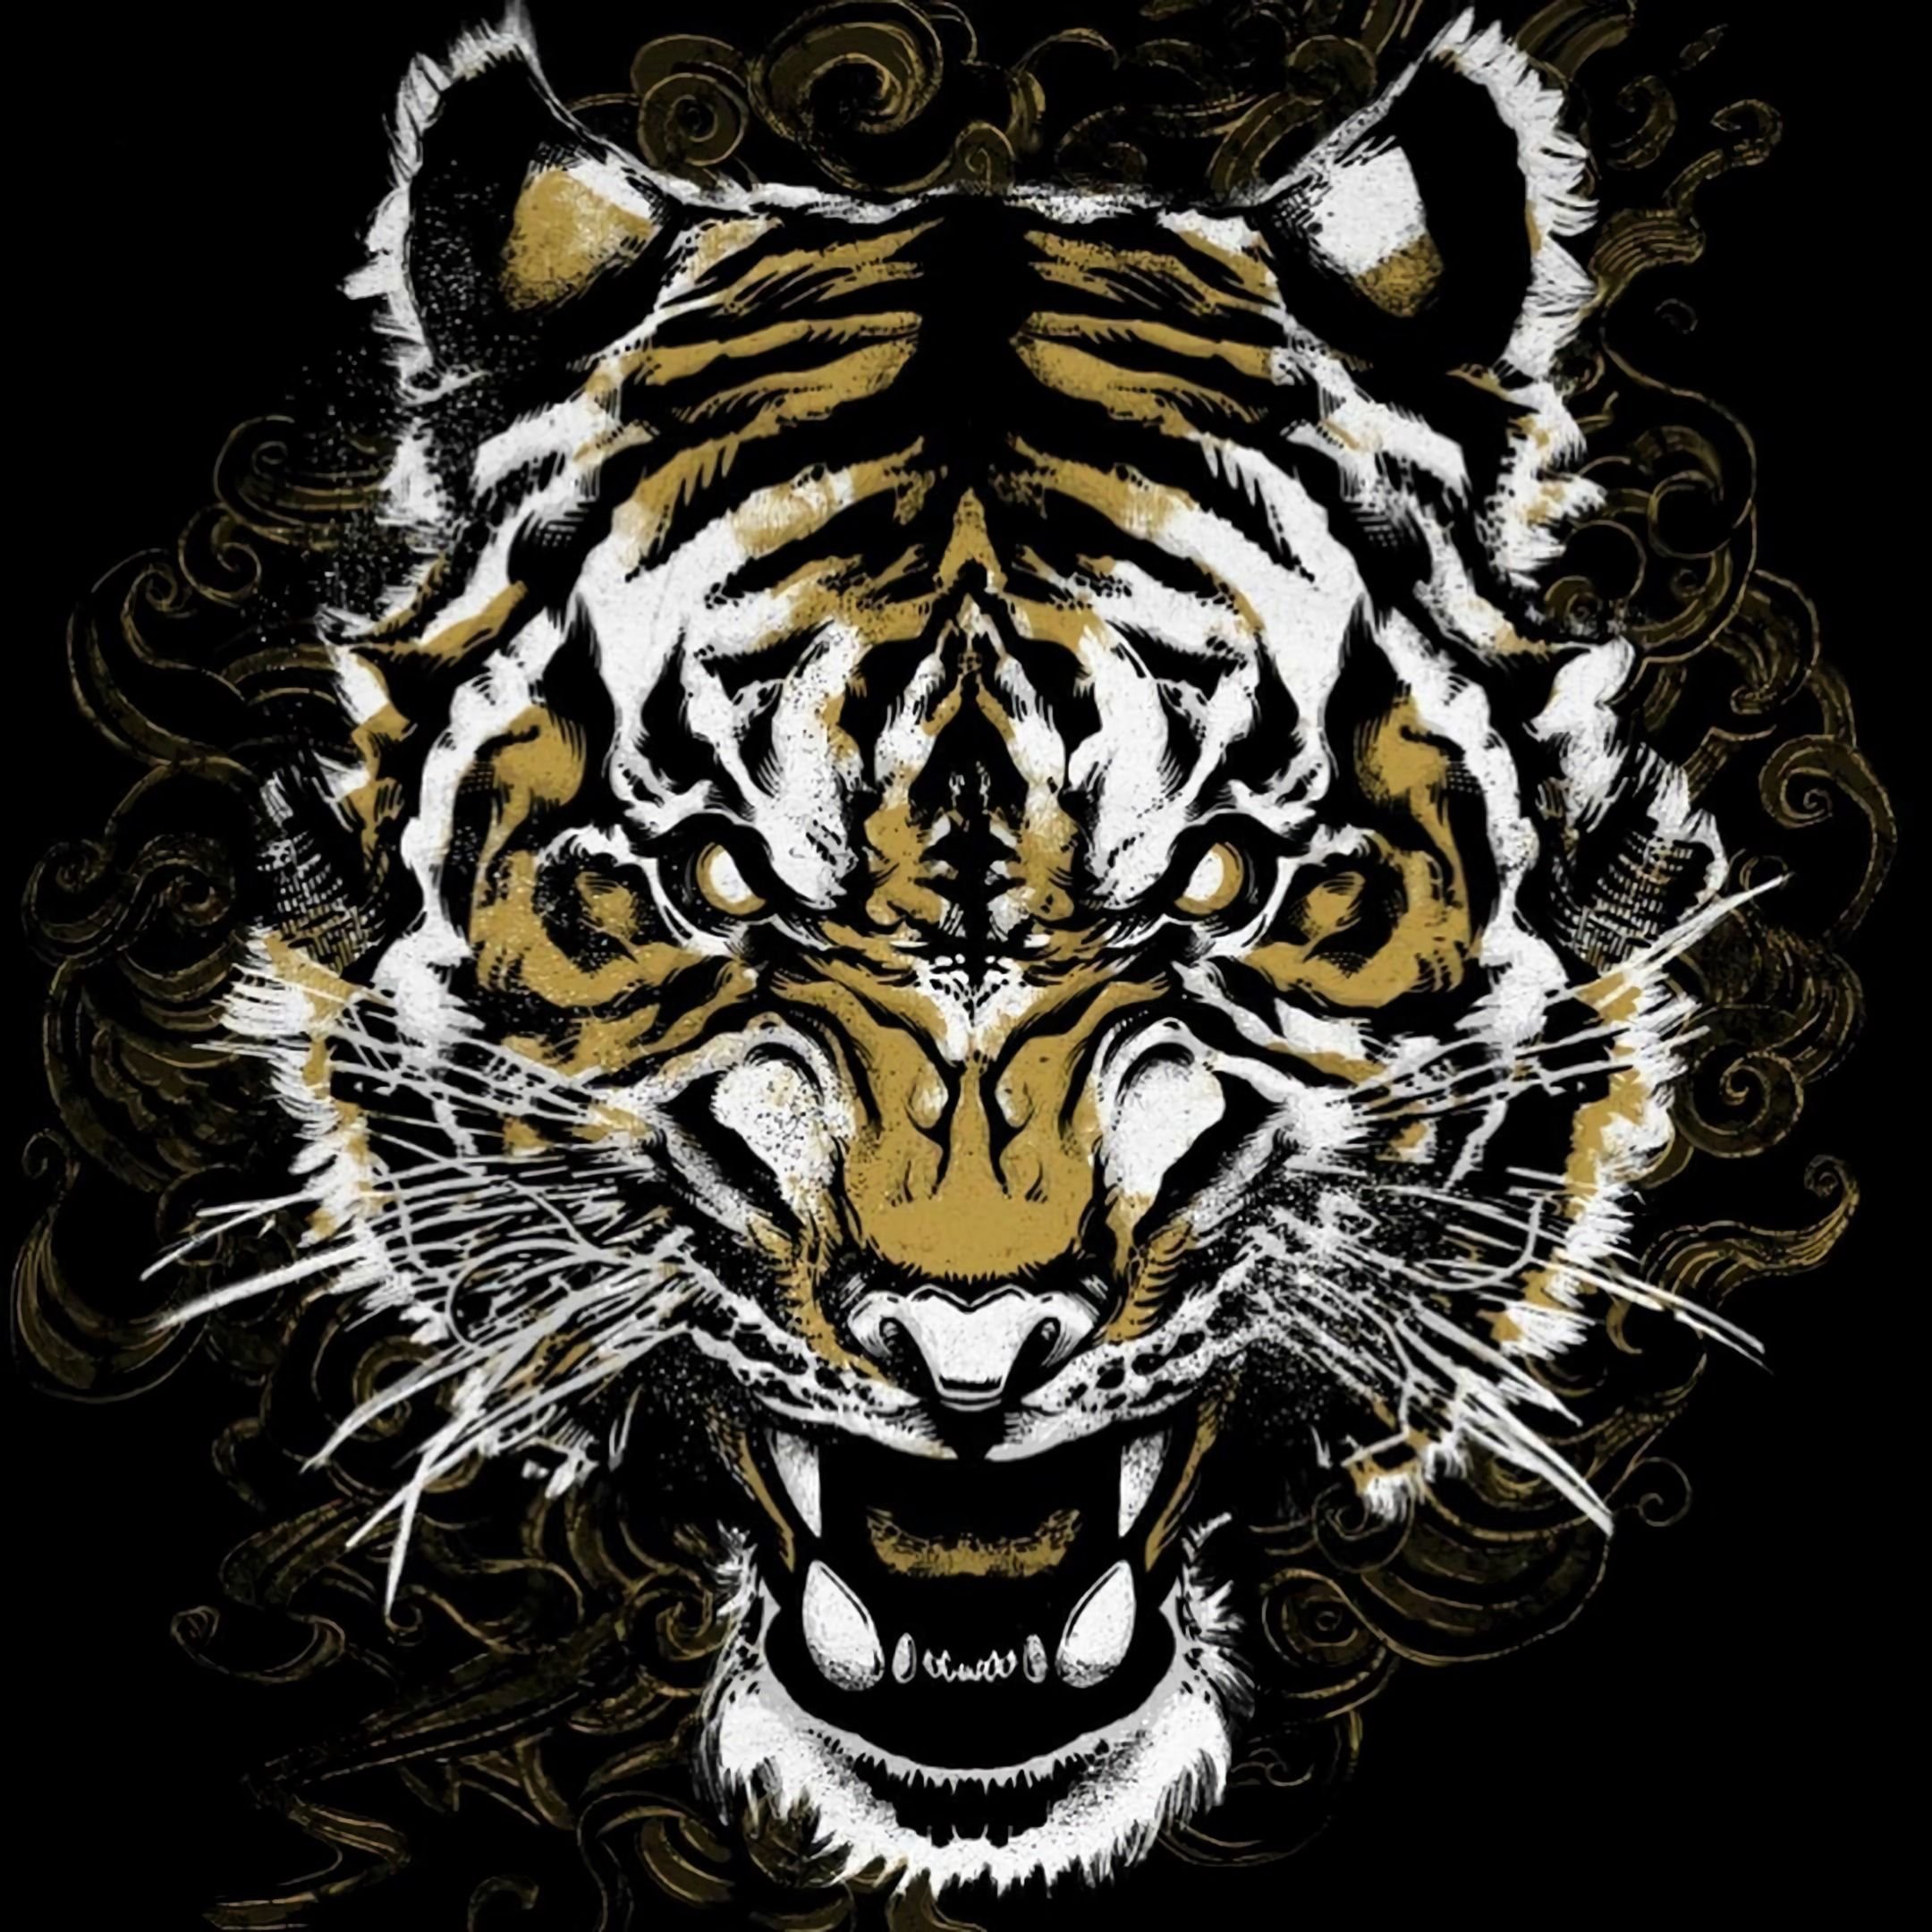 Заставка на телефон оскал. Тигр оскал анфас. Оскал тигра оскал. Тигр на черном фоне рисунок. Тигр на черном фоне обои.